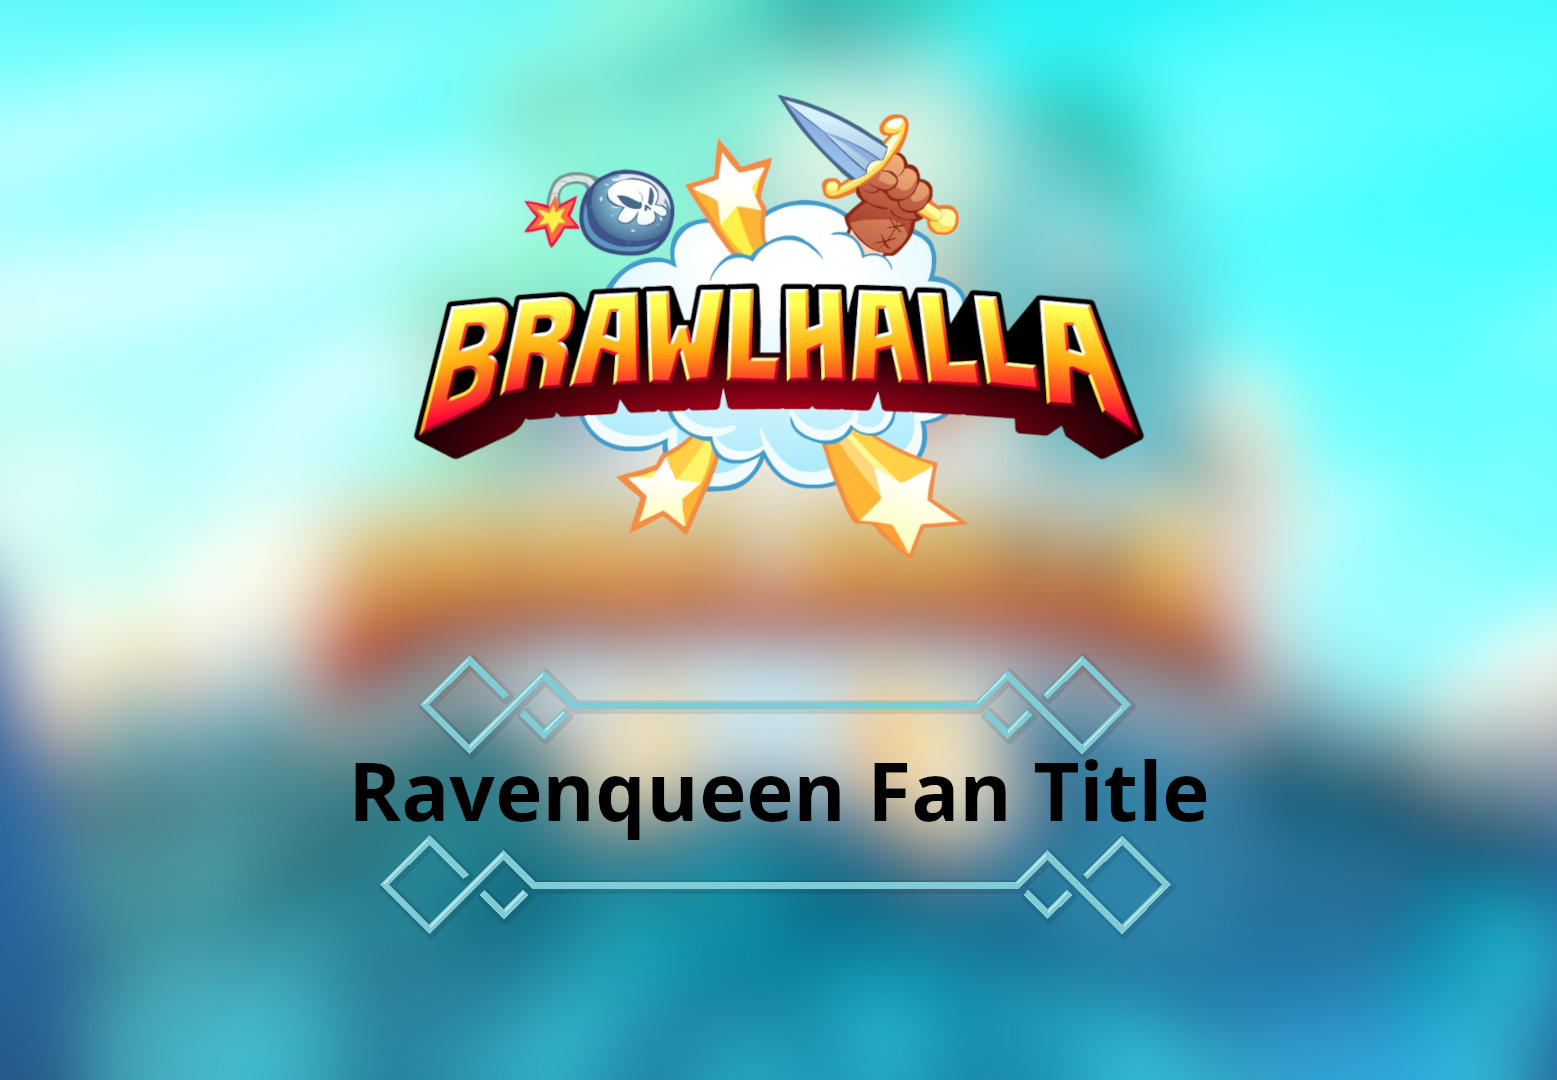 [$ 0.75] Brawlhalla - Ravenqueen Fan Title DLC CD Key